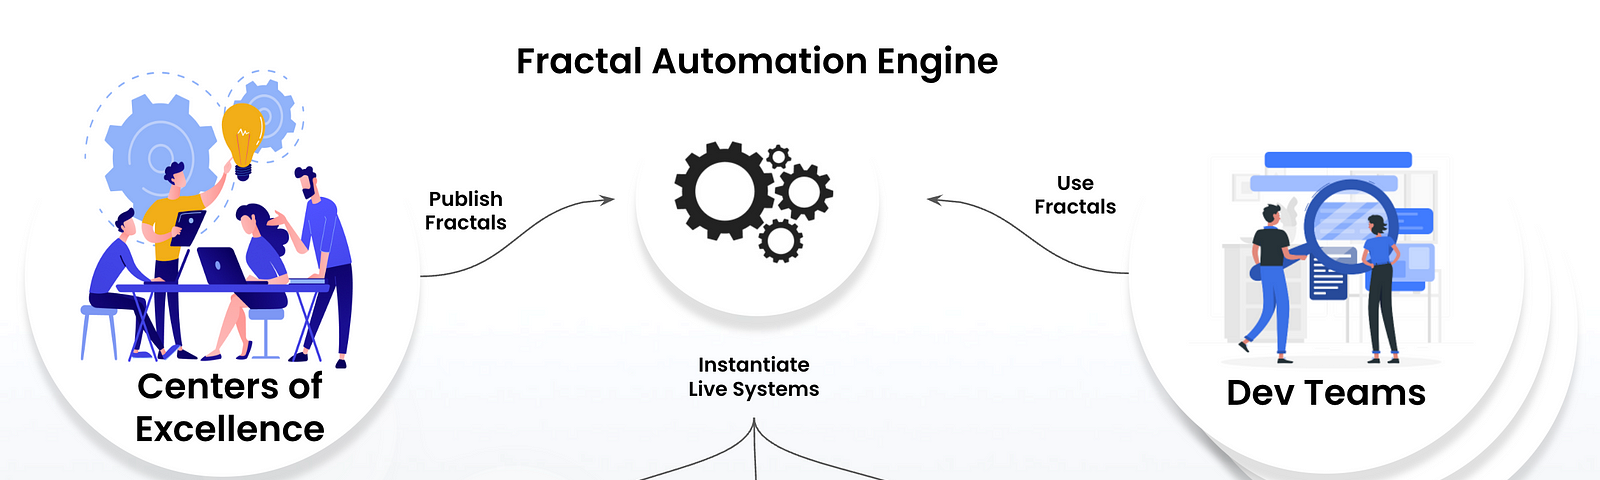 Fractal Automation